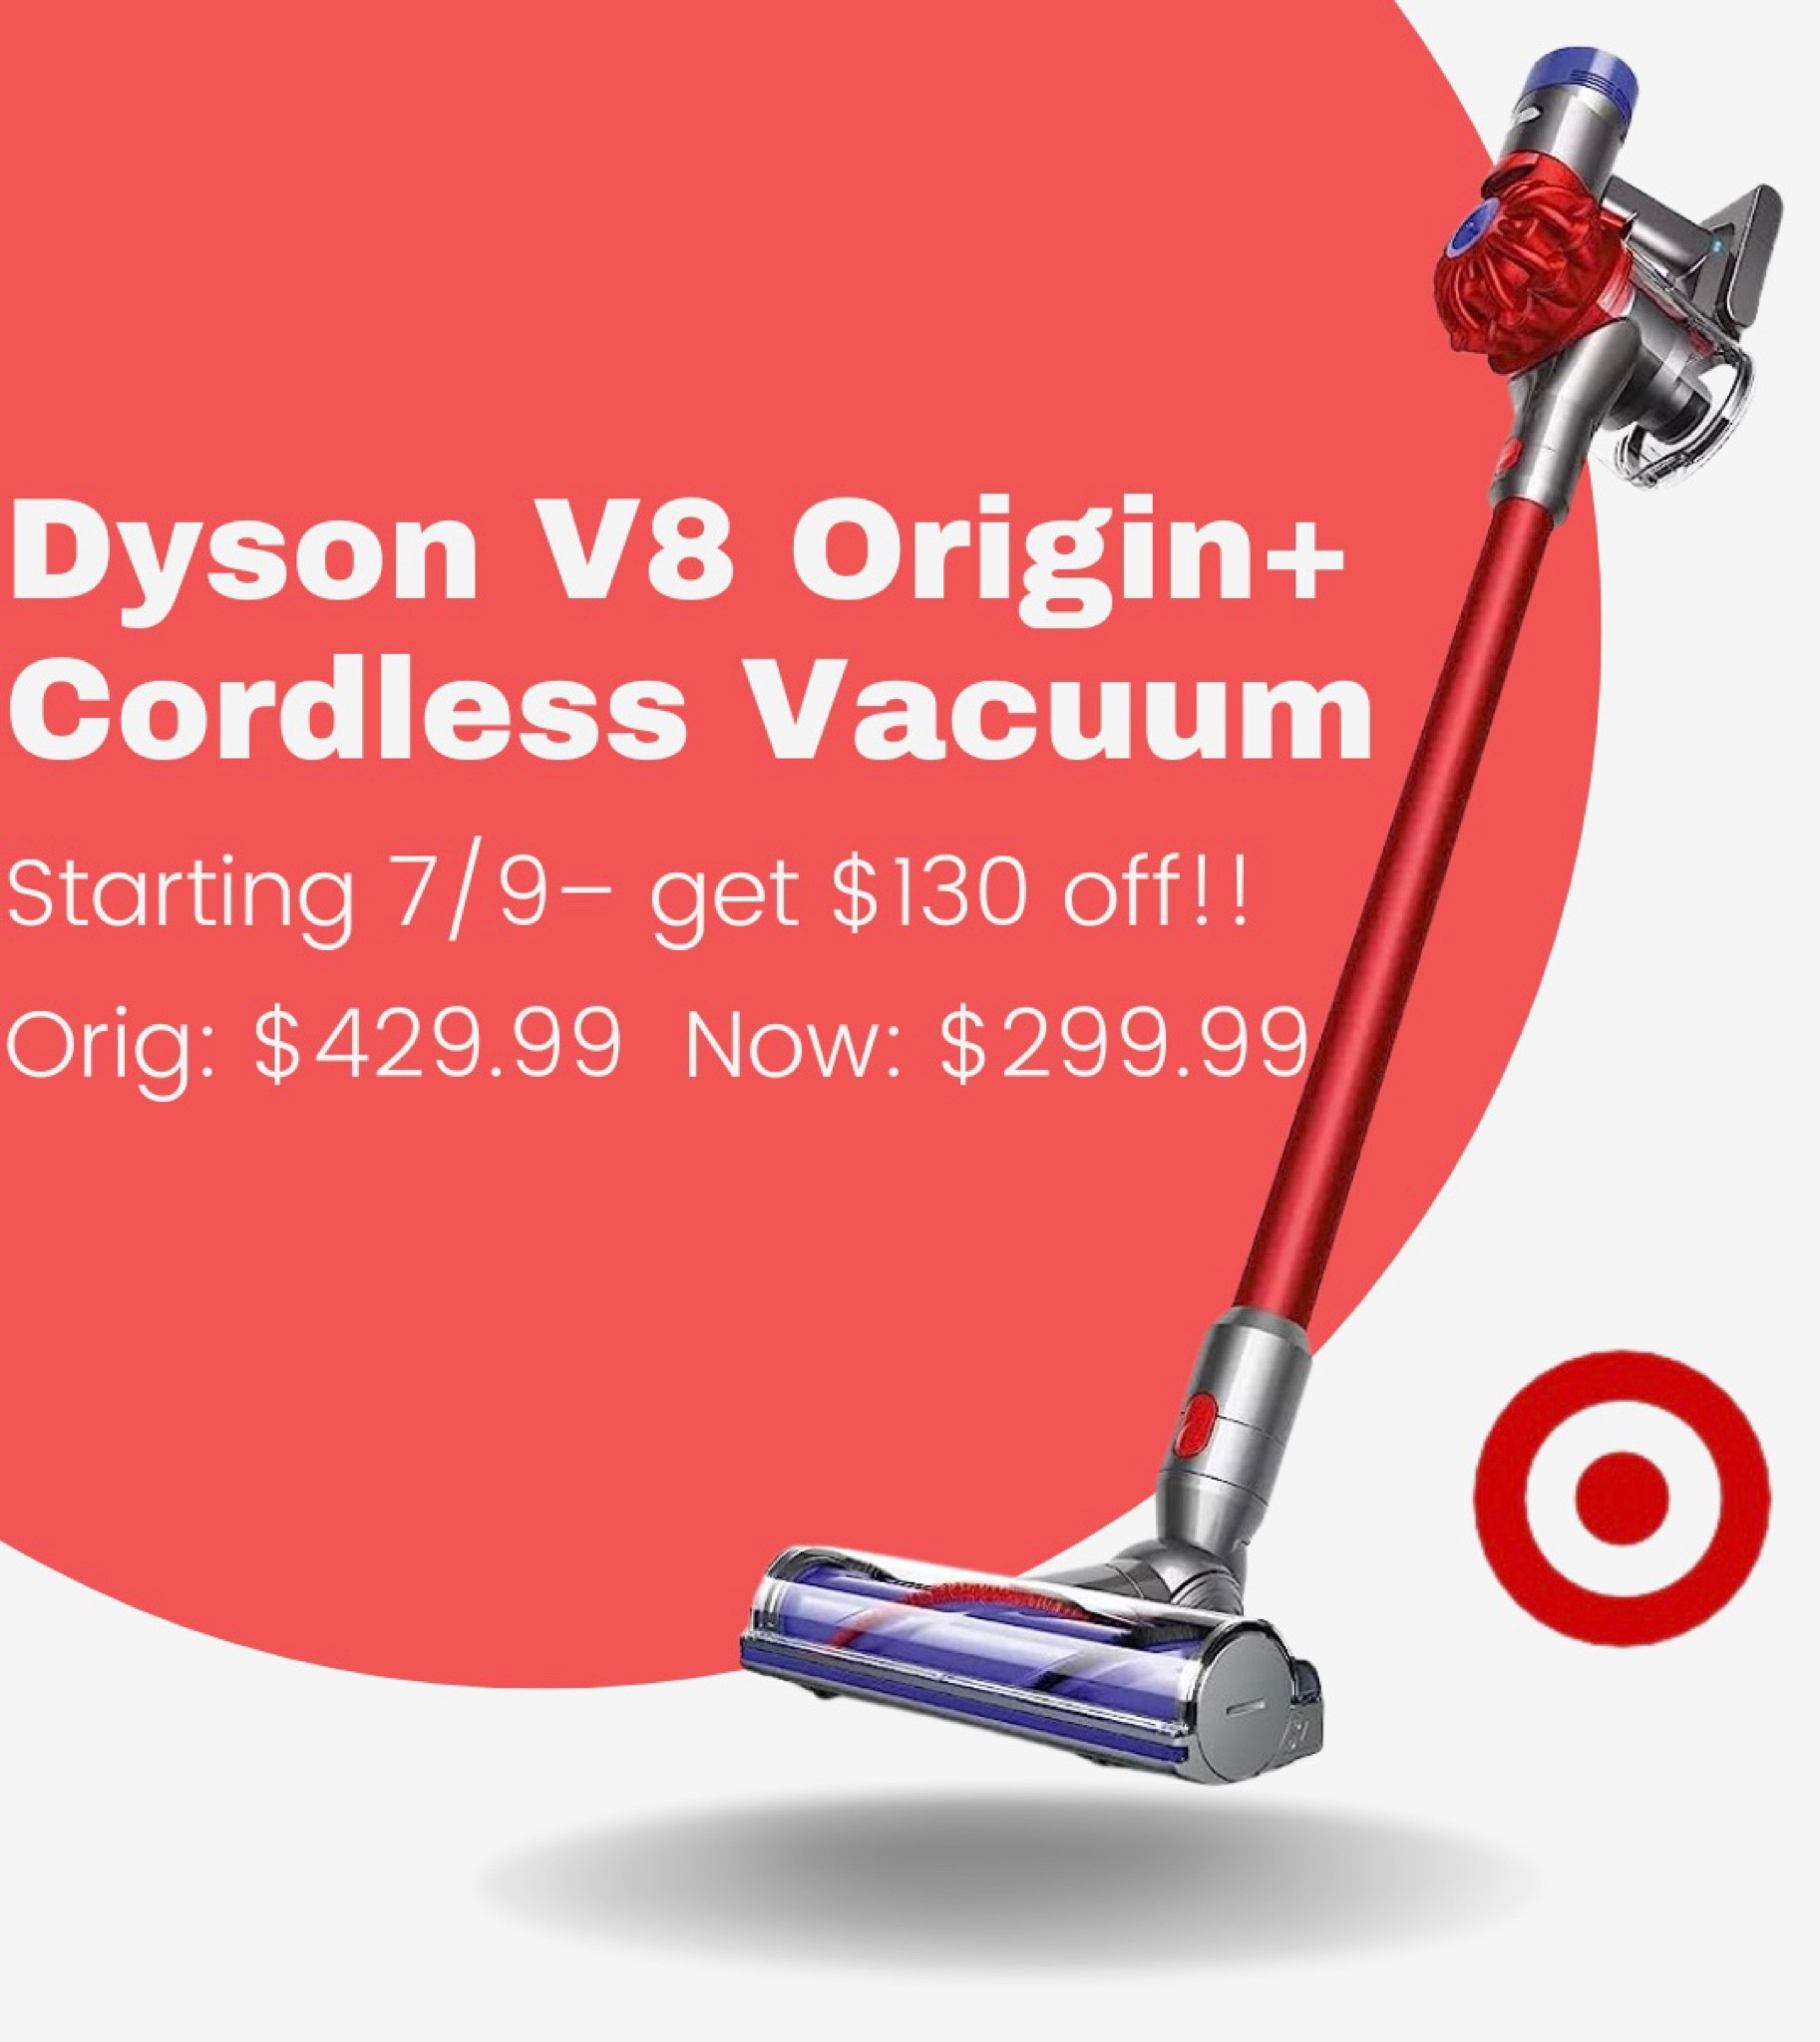  Dyson V8 Origin+ Cordless Vacuum